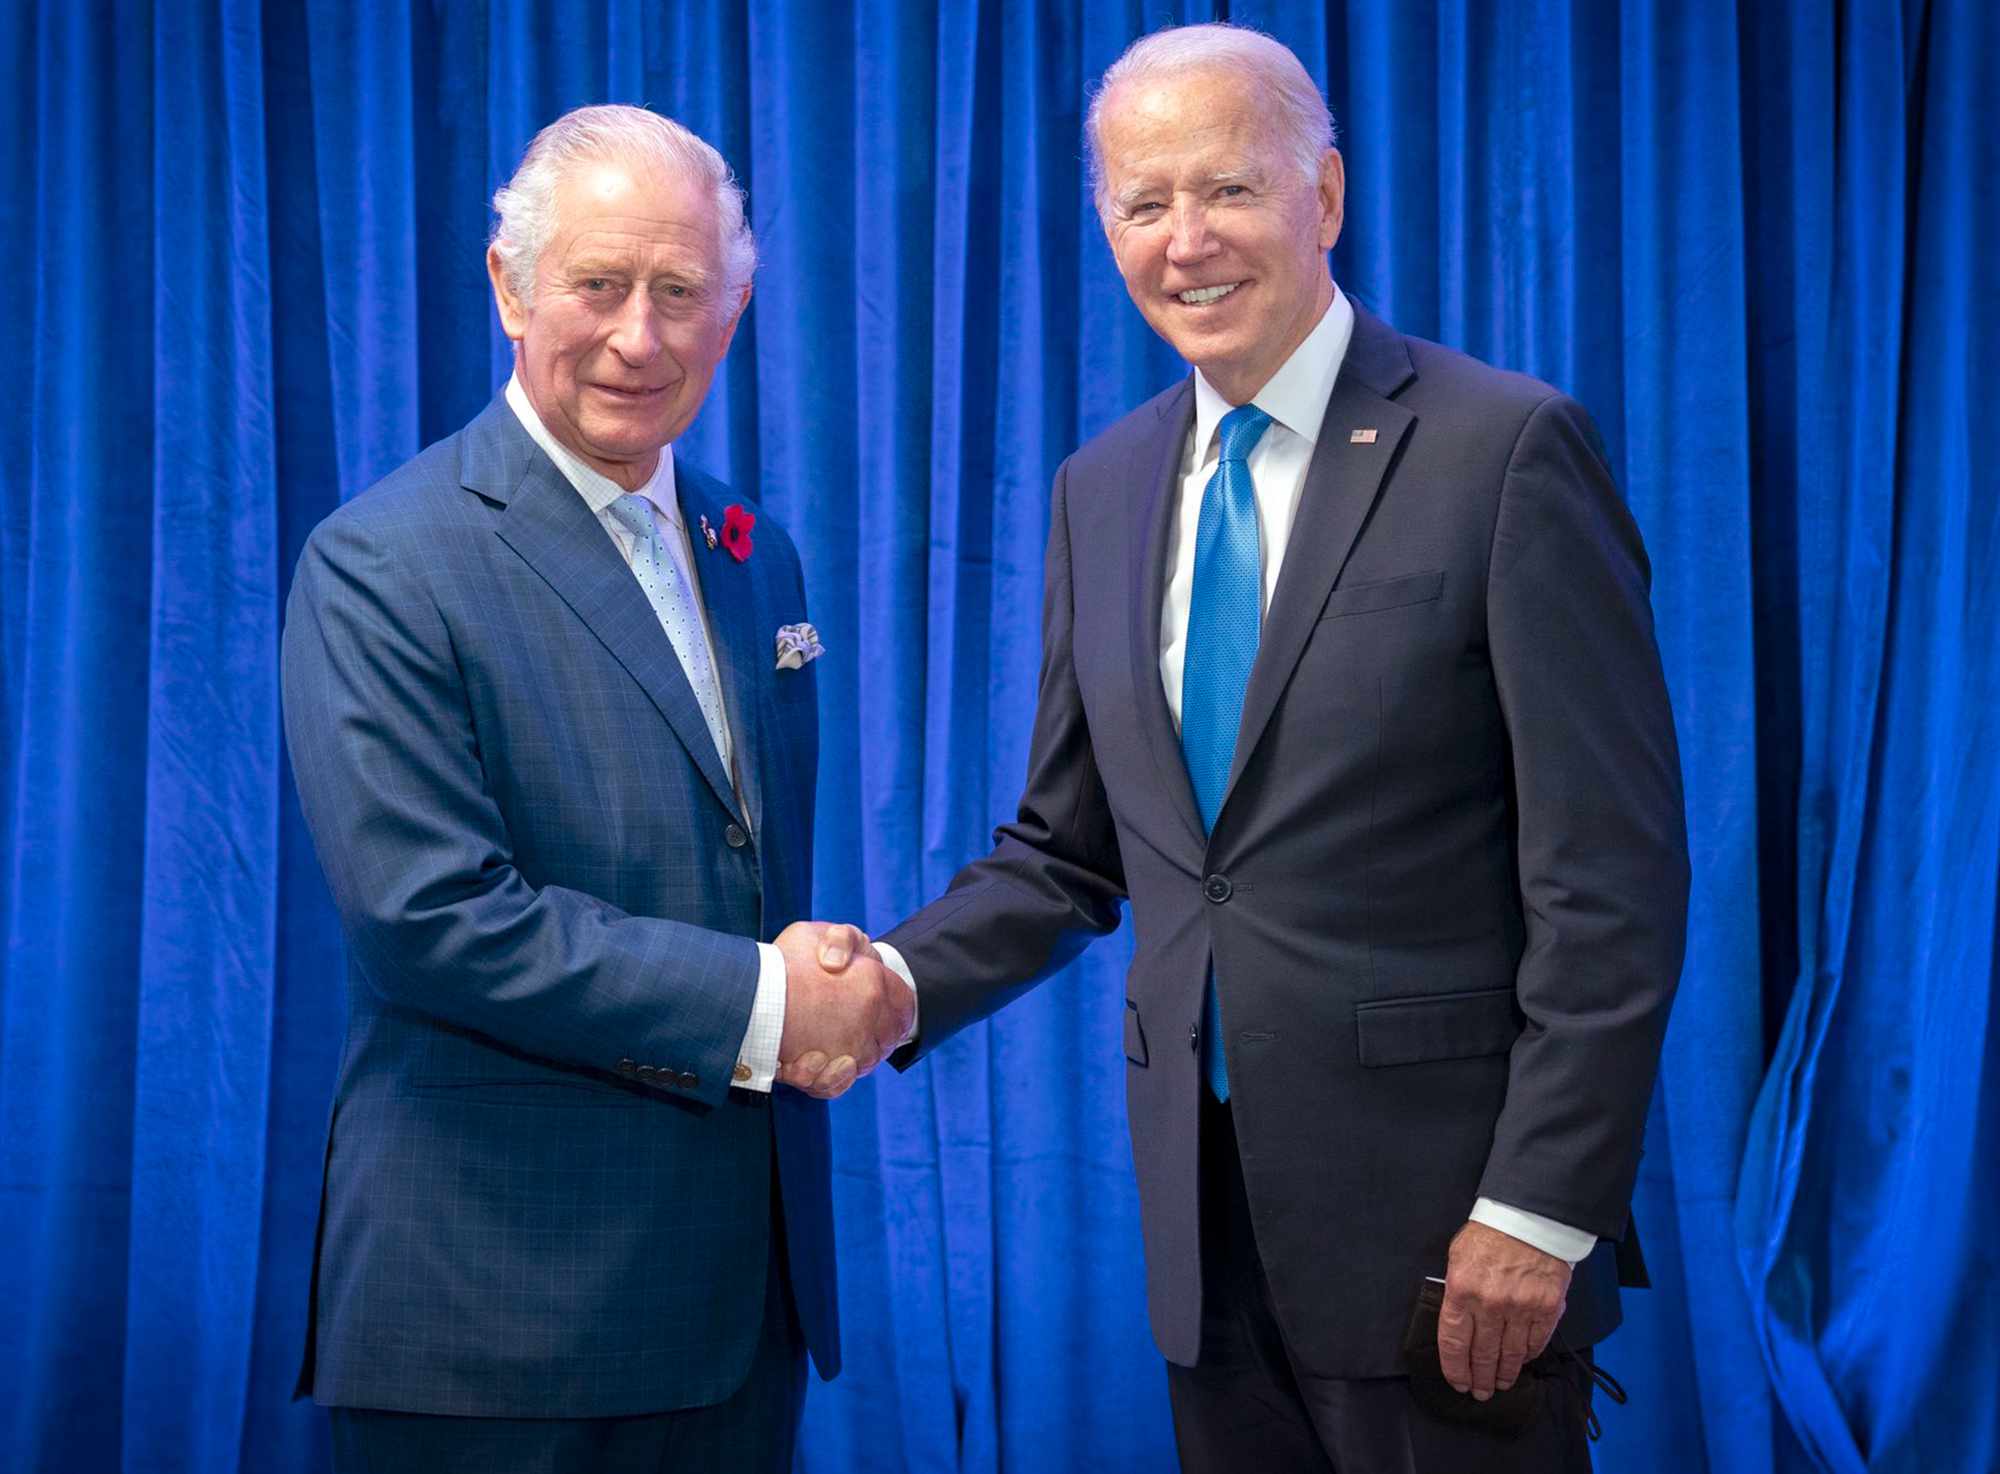 Prince Charles and Joe Biden